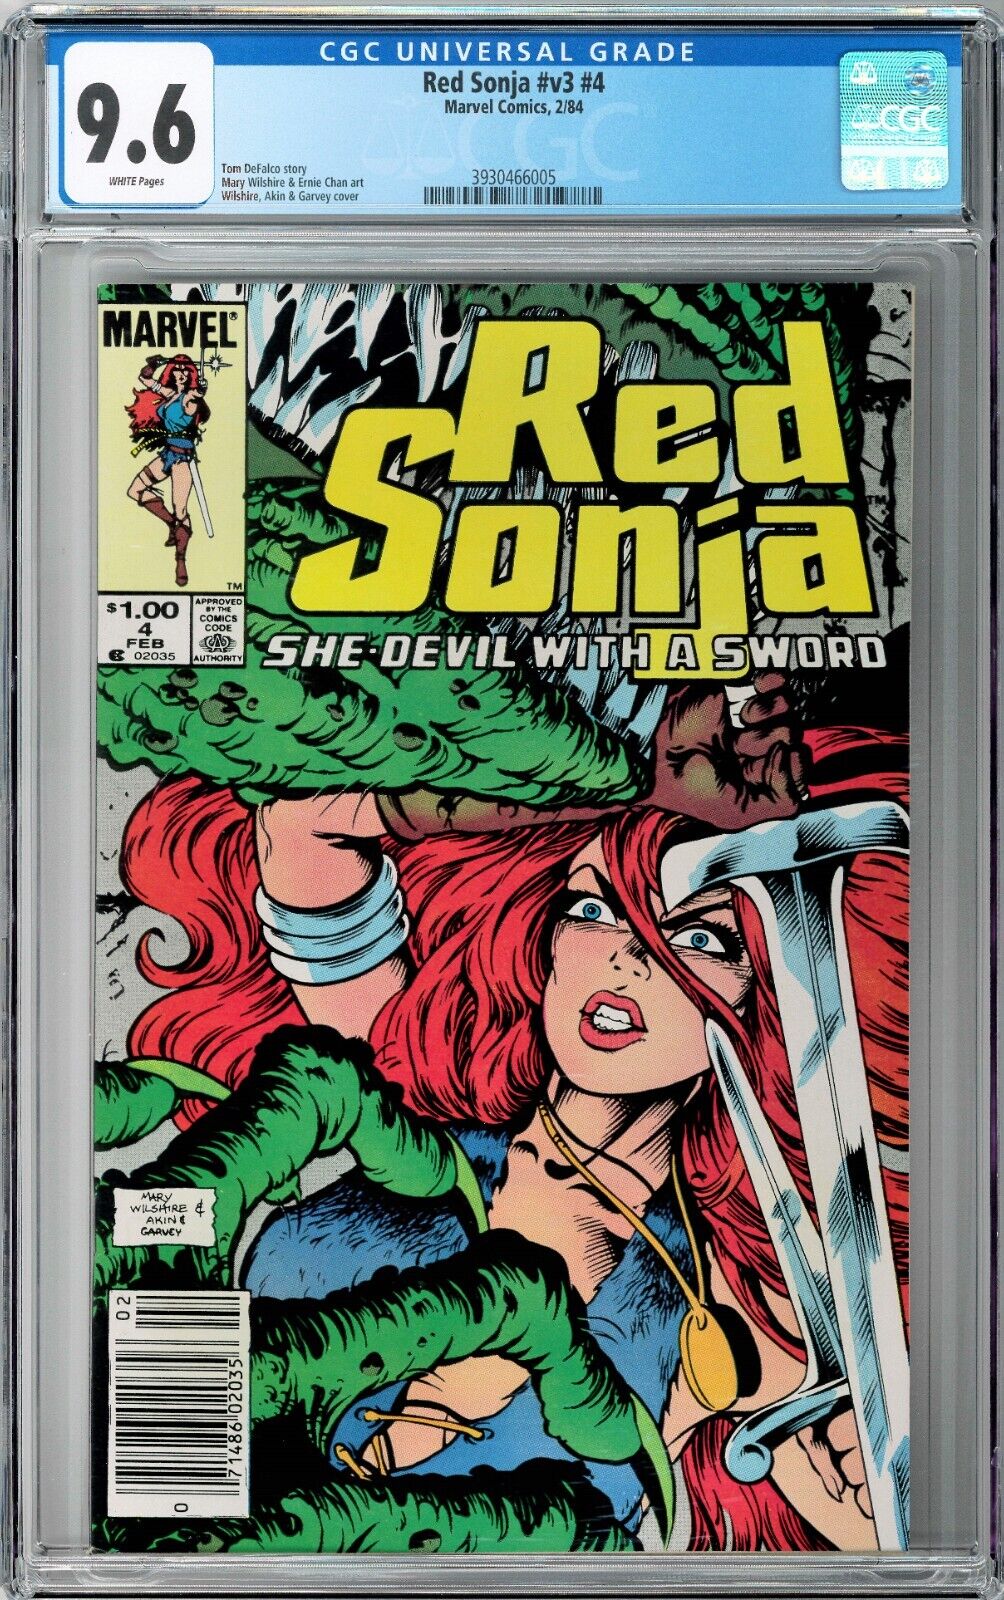 Red Sonja v3 #4 CGC 9.6 (Feb 1984, Marvel) Tom DeFalco Story Mary Wilshire Cover